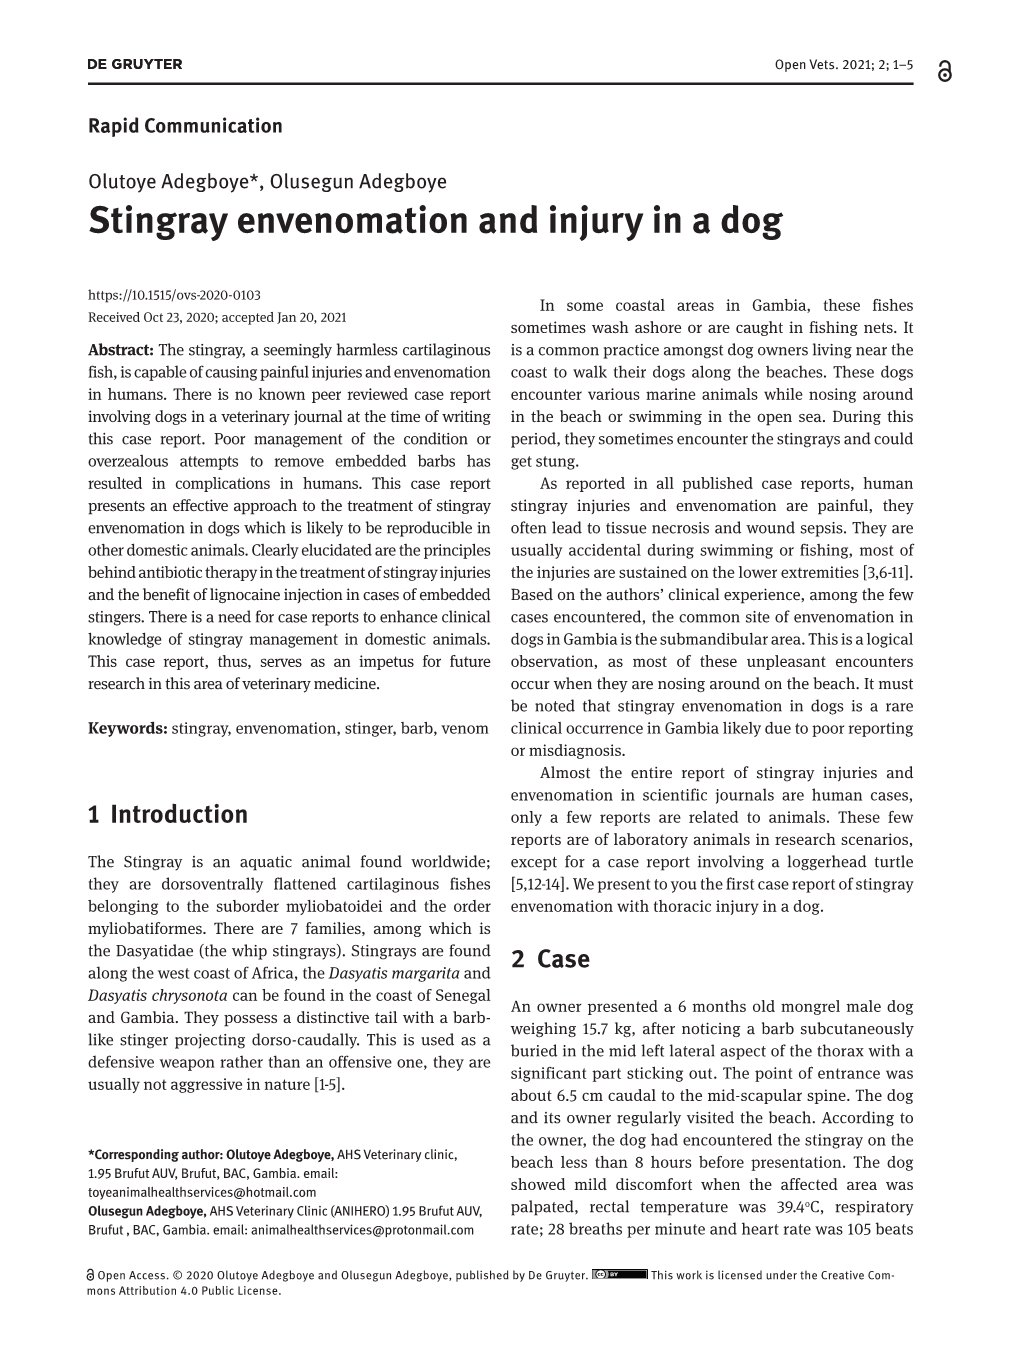 Stingray Envenomation and Injury in a Dog